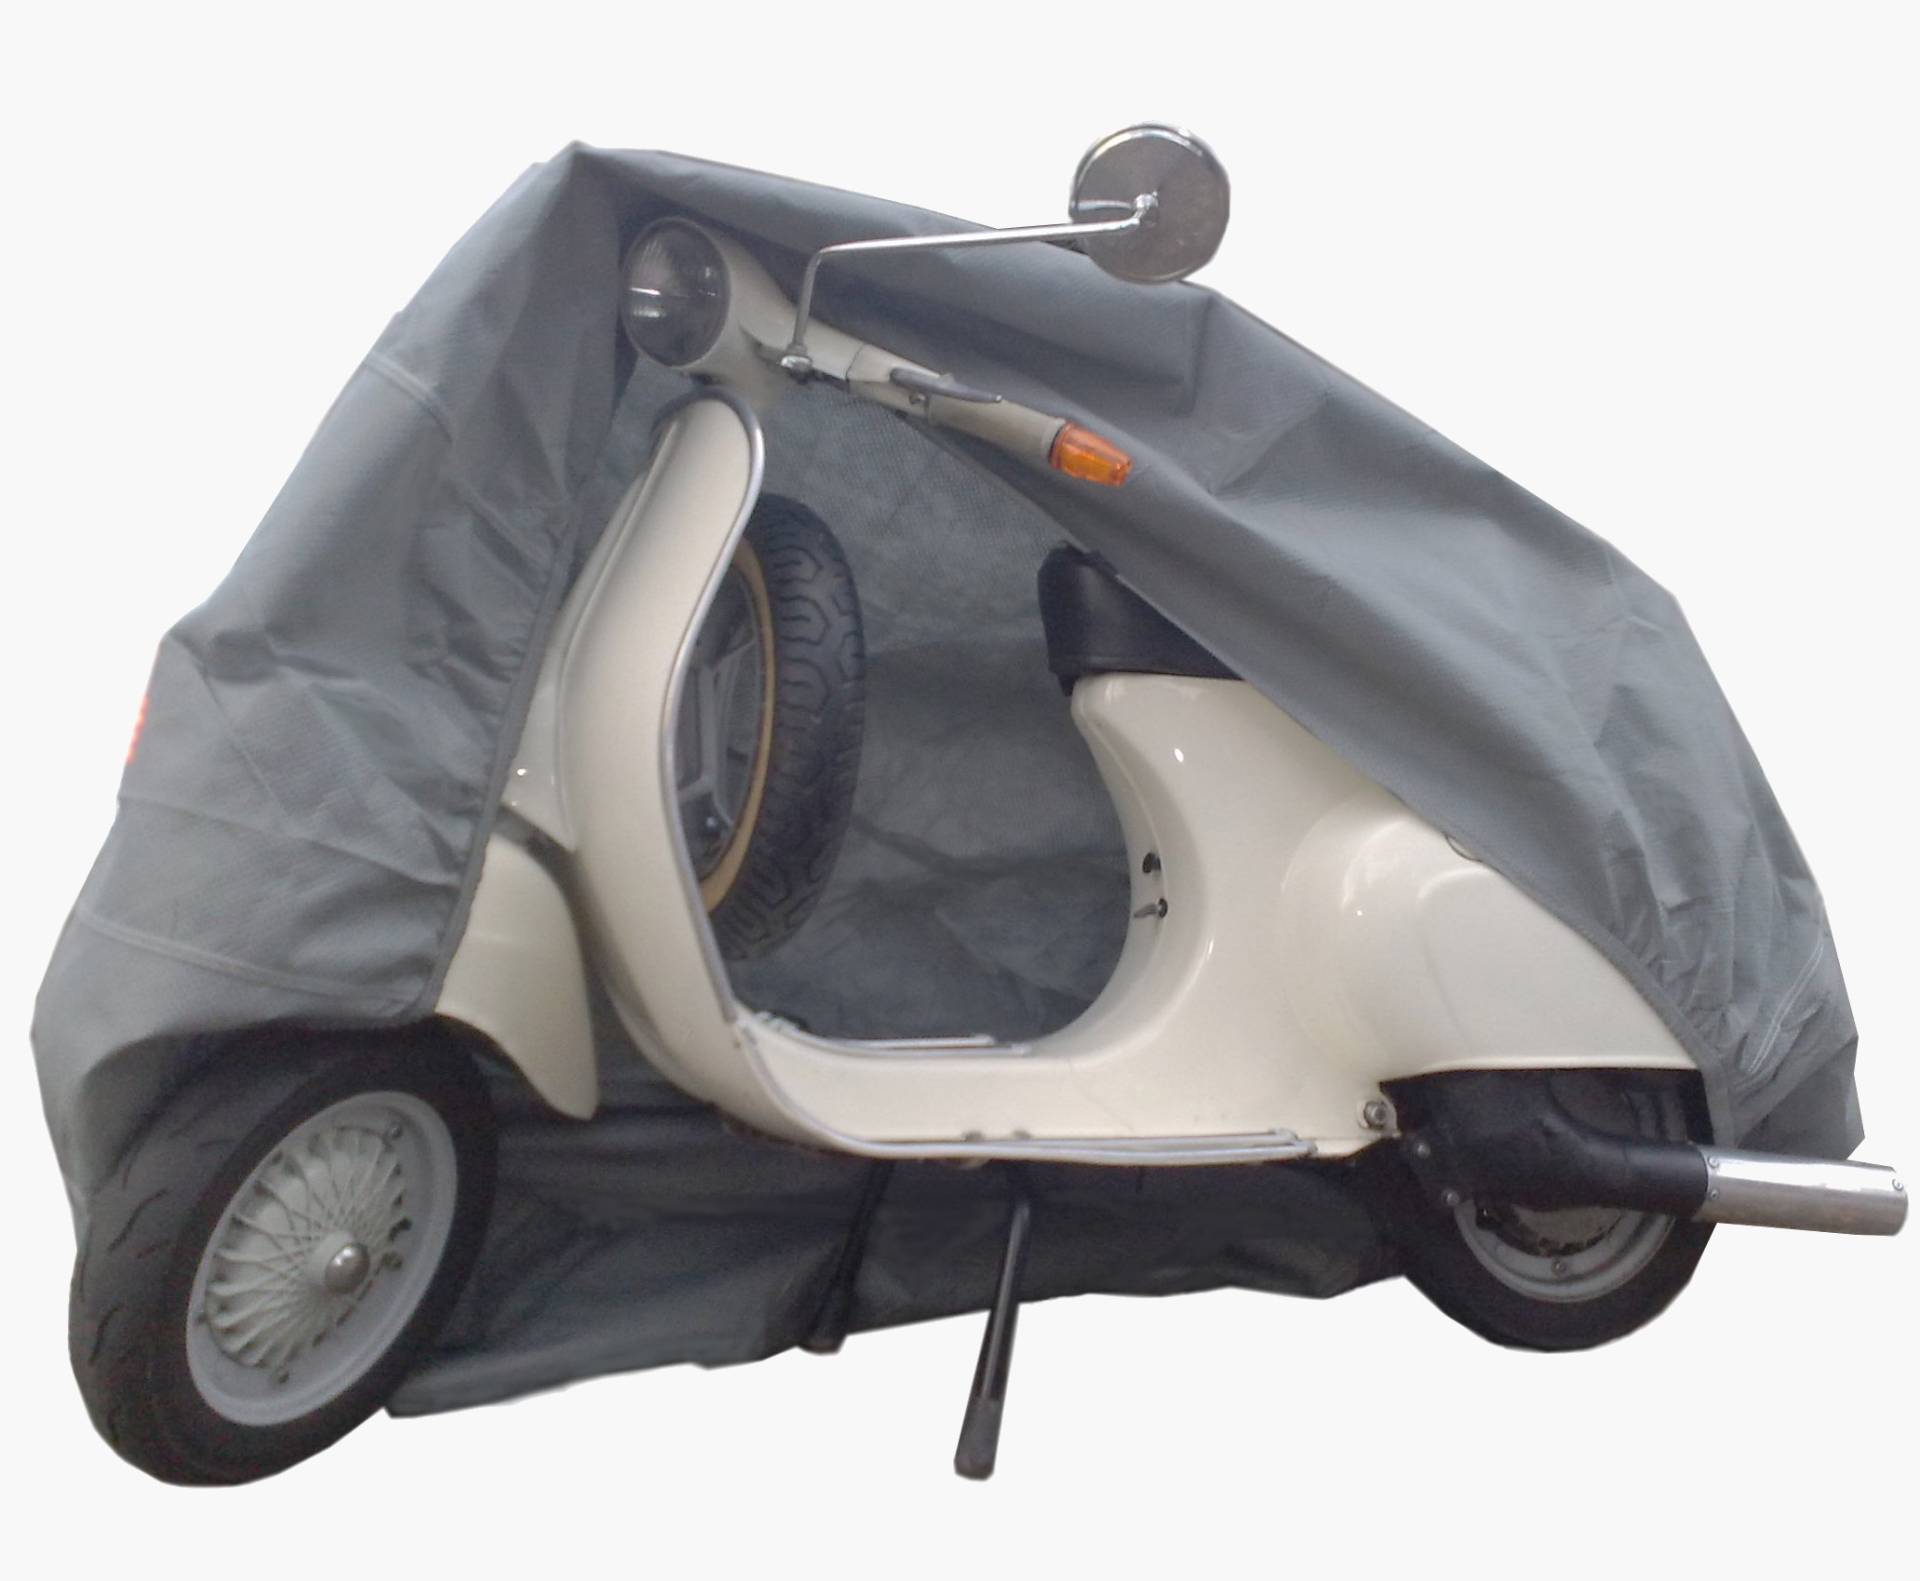 Car-e-Cover Motorradplane Motorrad Abdeckung Abdeckplane atmungsaktiv Innenbereich für Vespa GTS 300 von Car-e-Cover